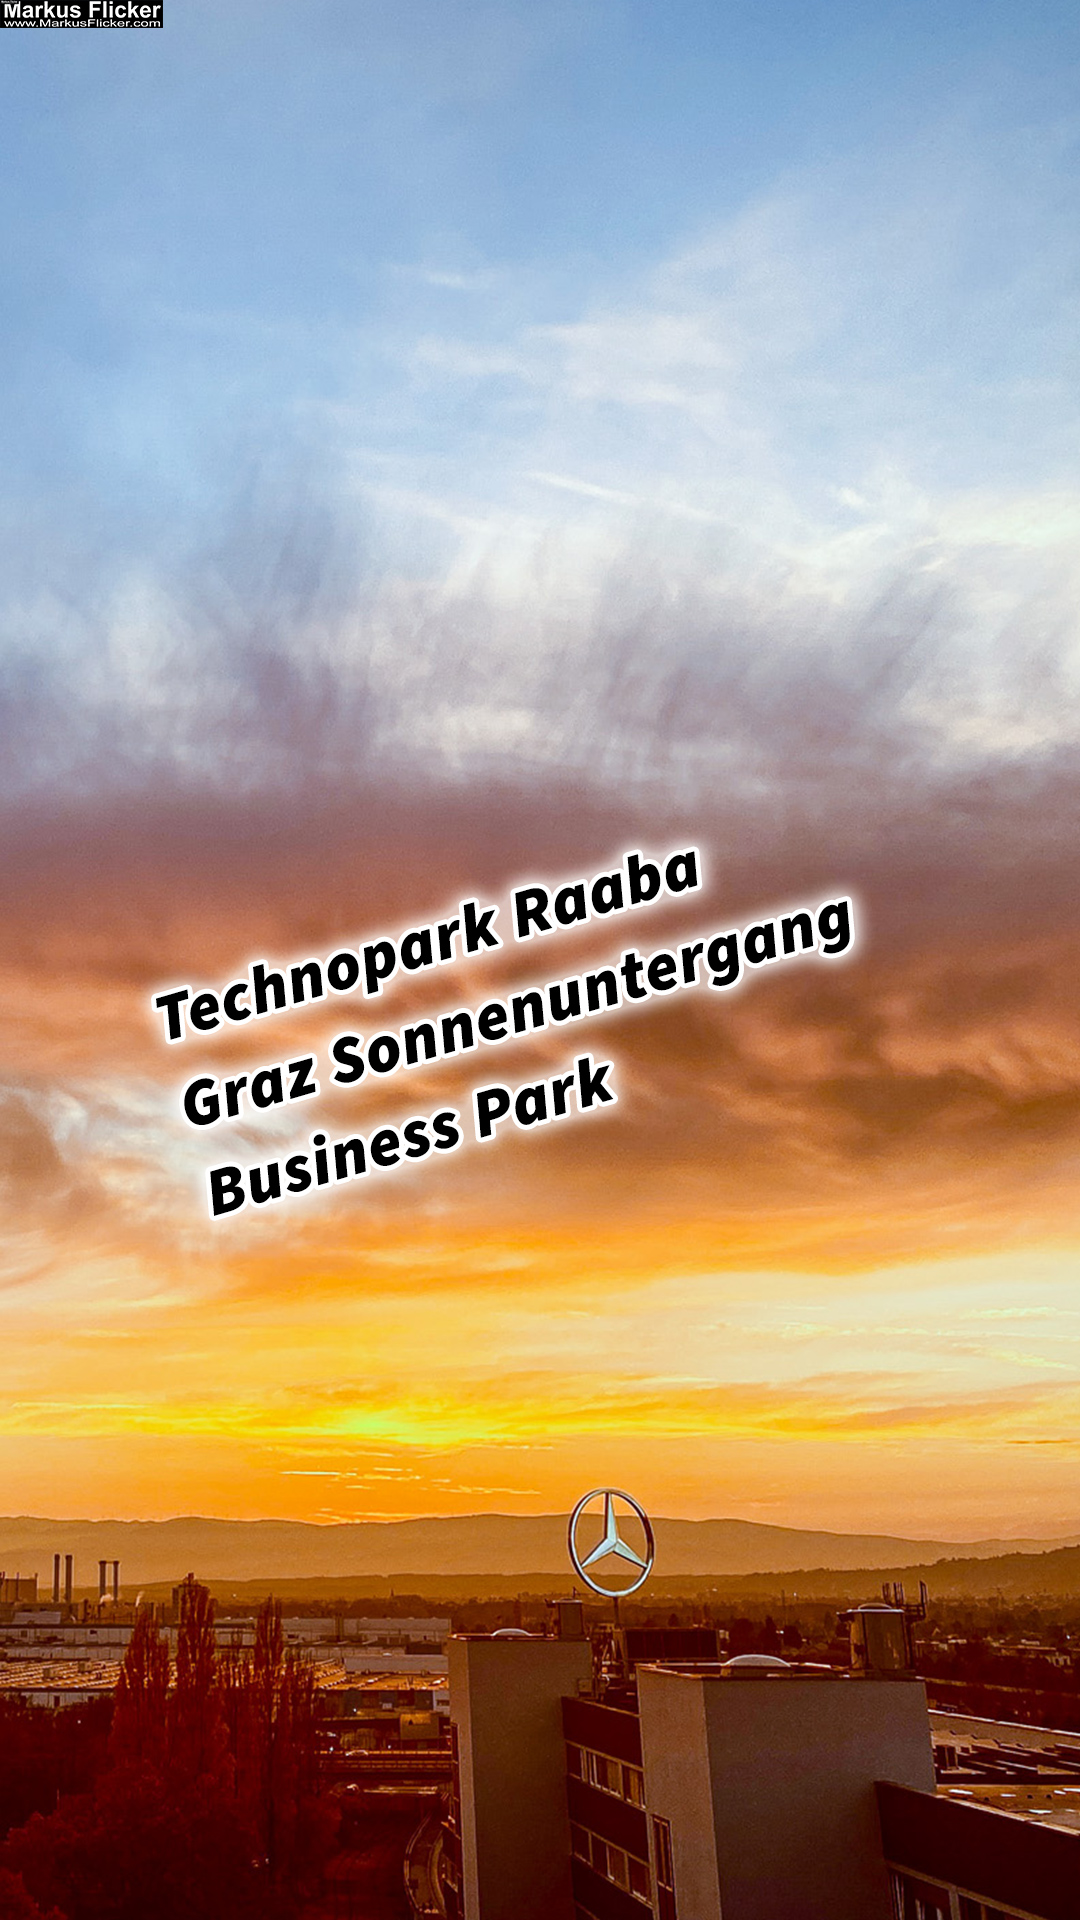 Technopark Raaba Graz Sonnenuntergang inkl. Mercedes Stern Business Park